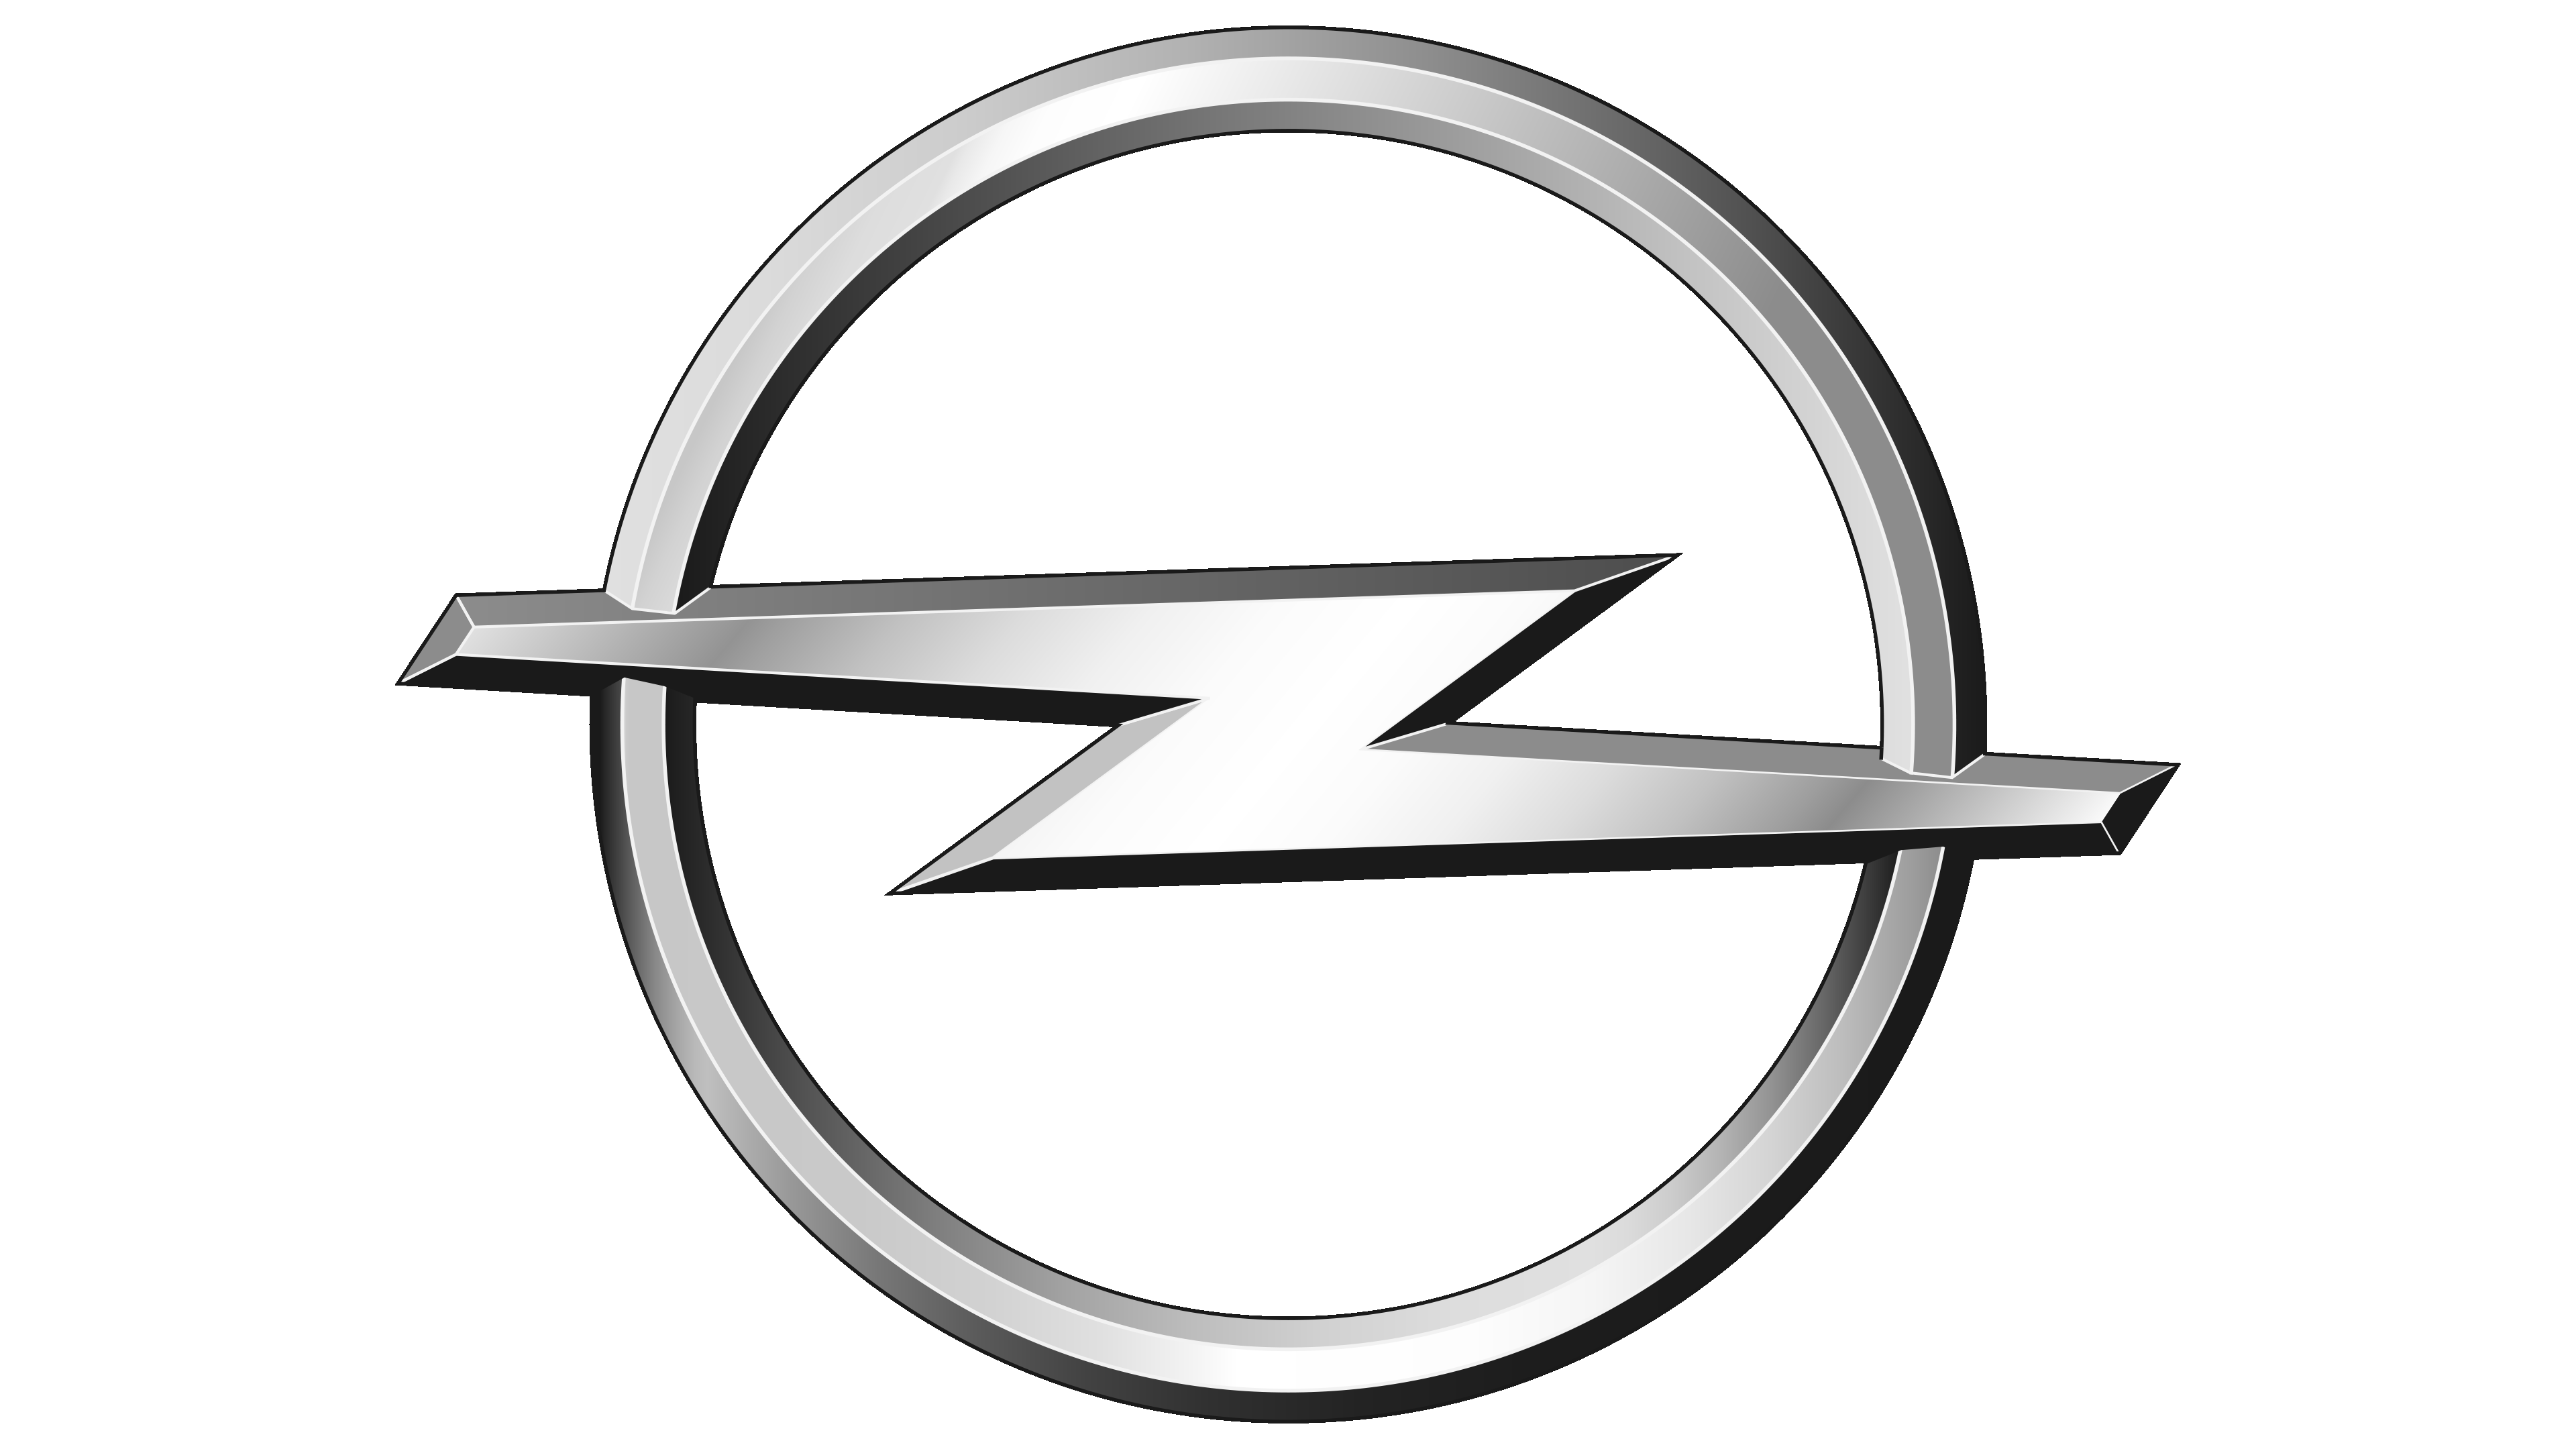 Opel Logo PNG Image HD